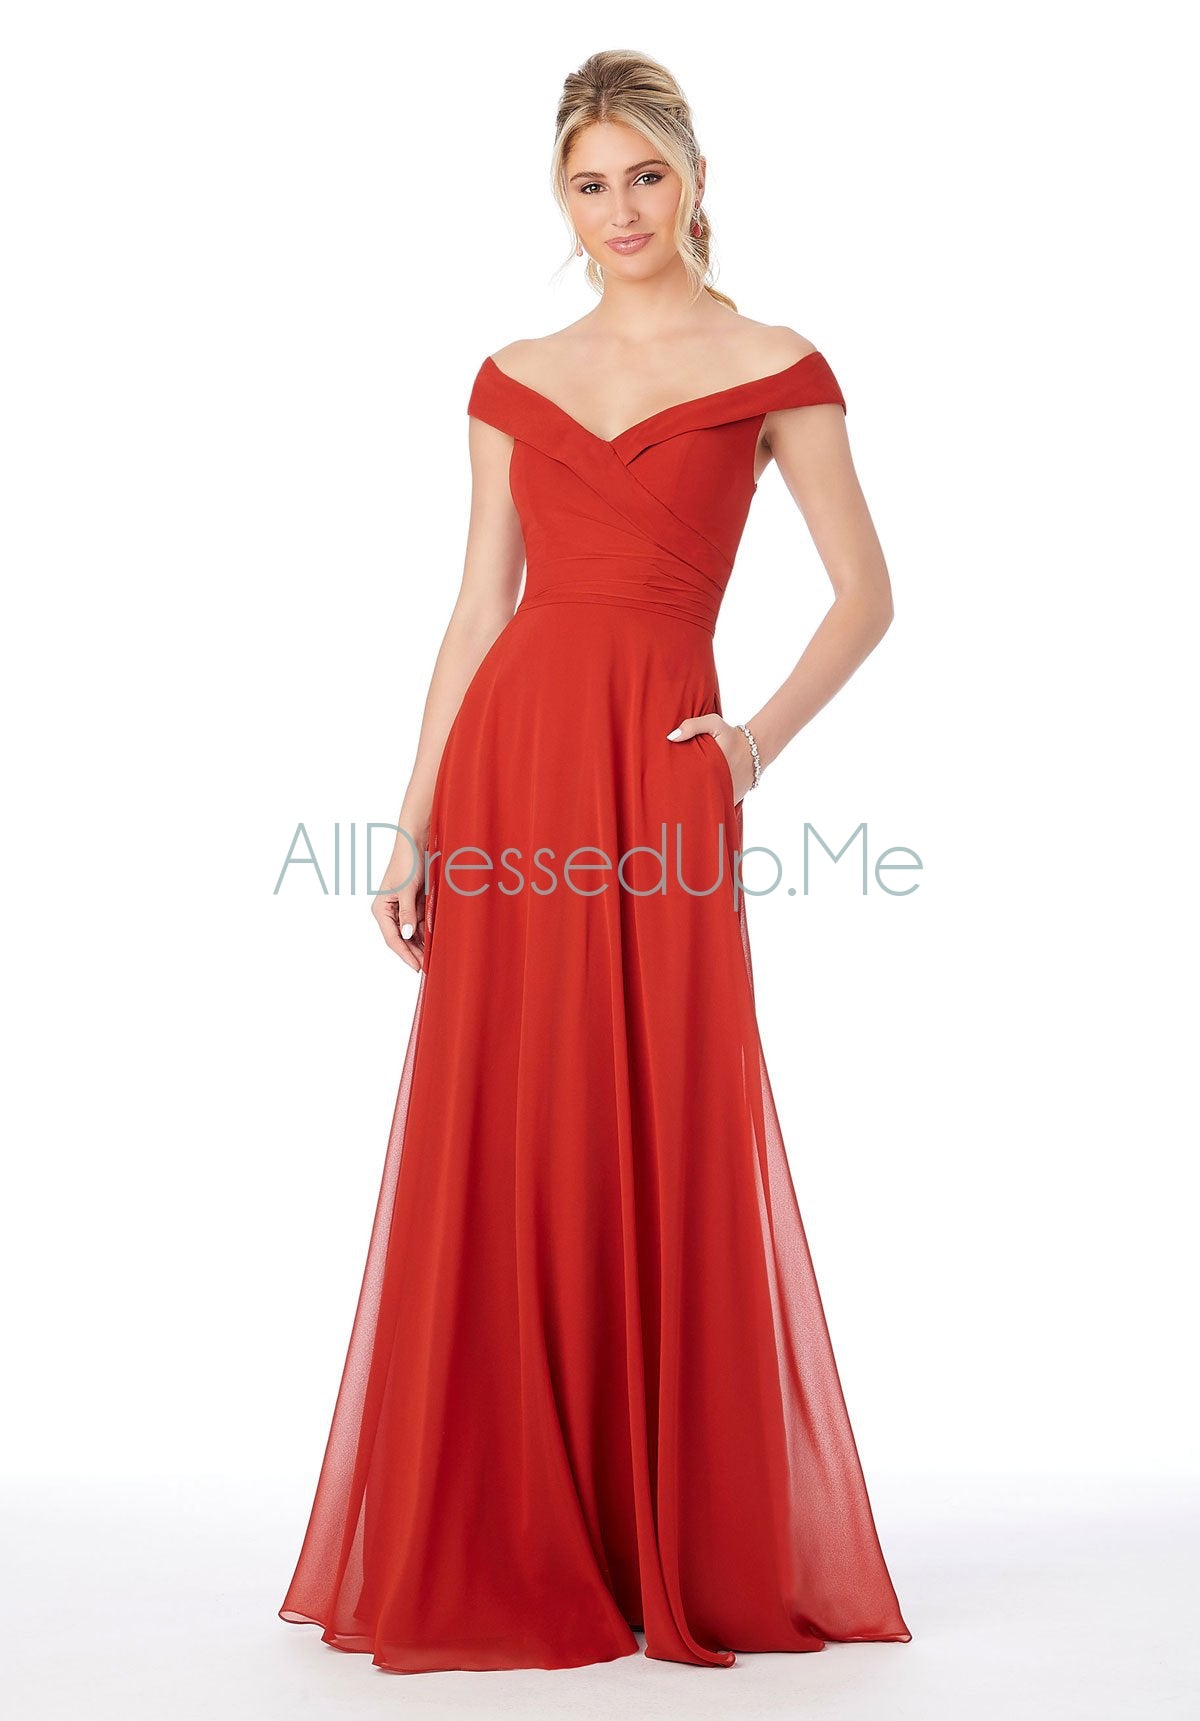 Morilee - 21692 - Cheron's Bridal, Bridesmaids Dress